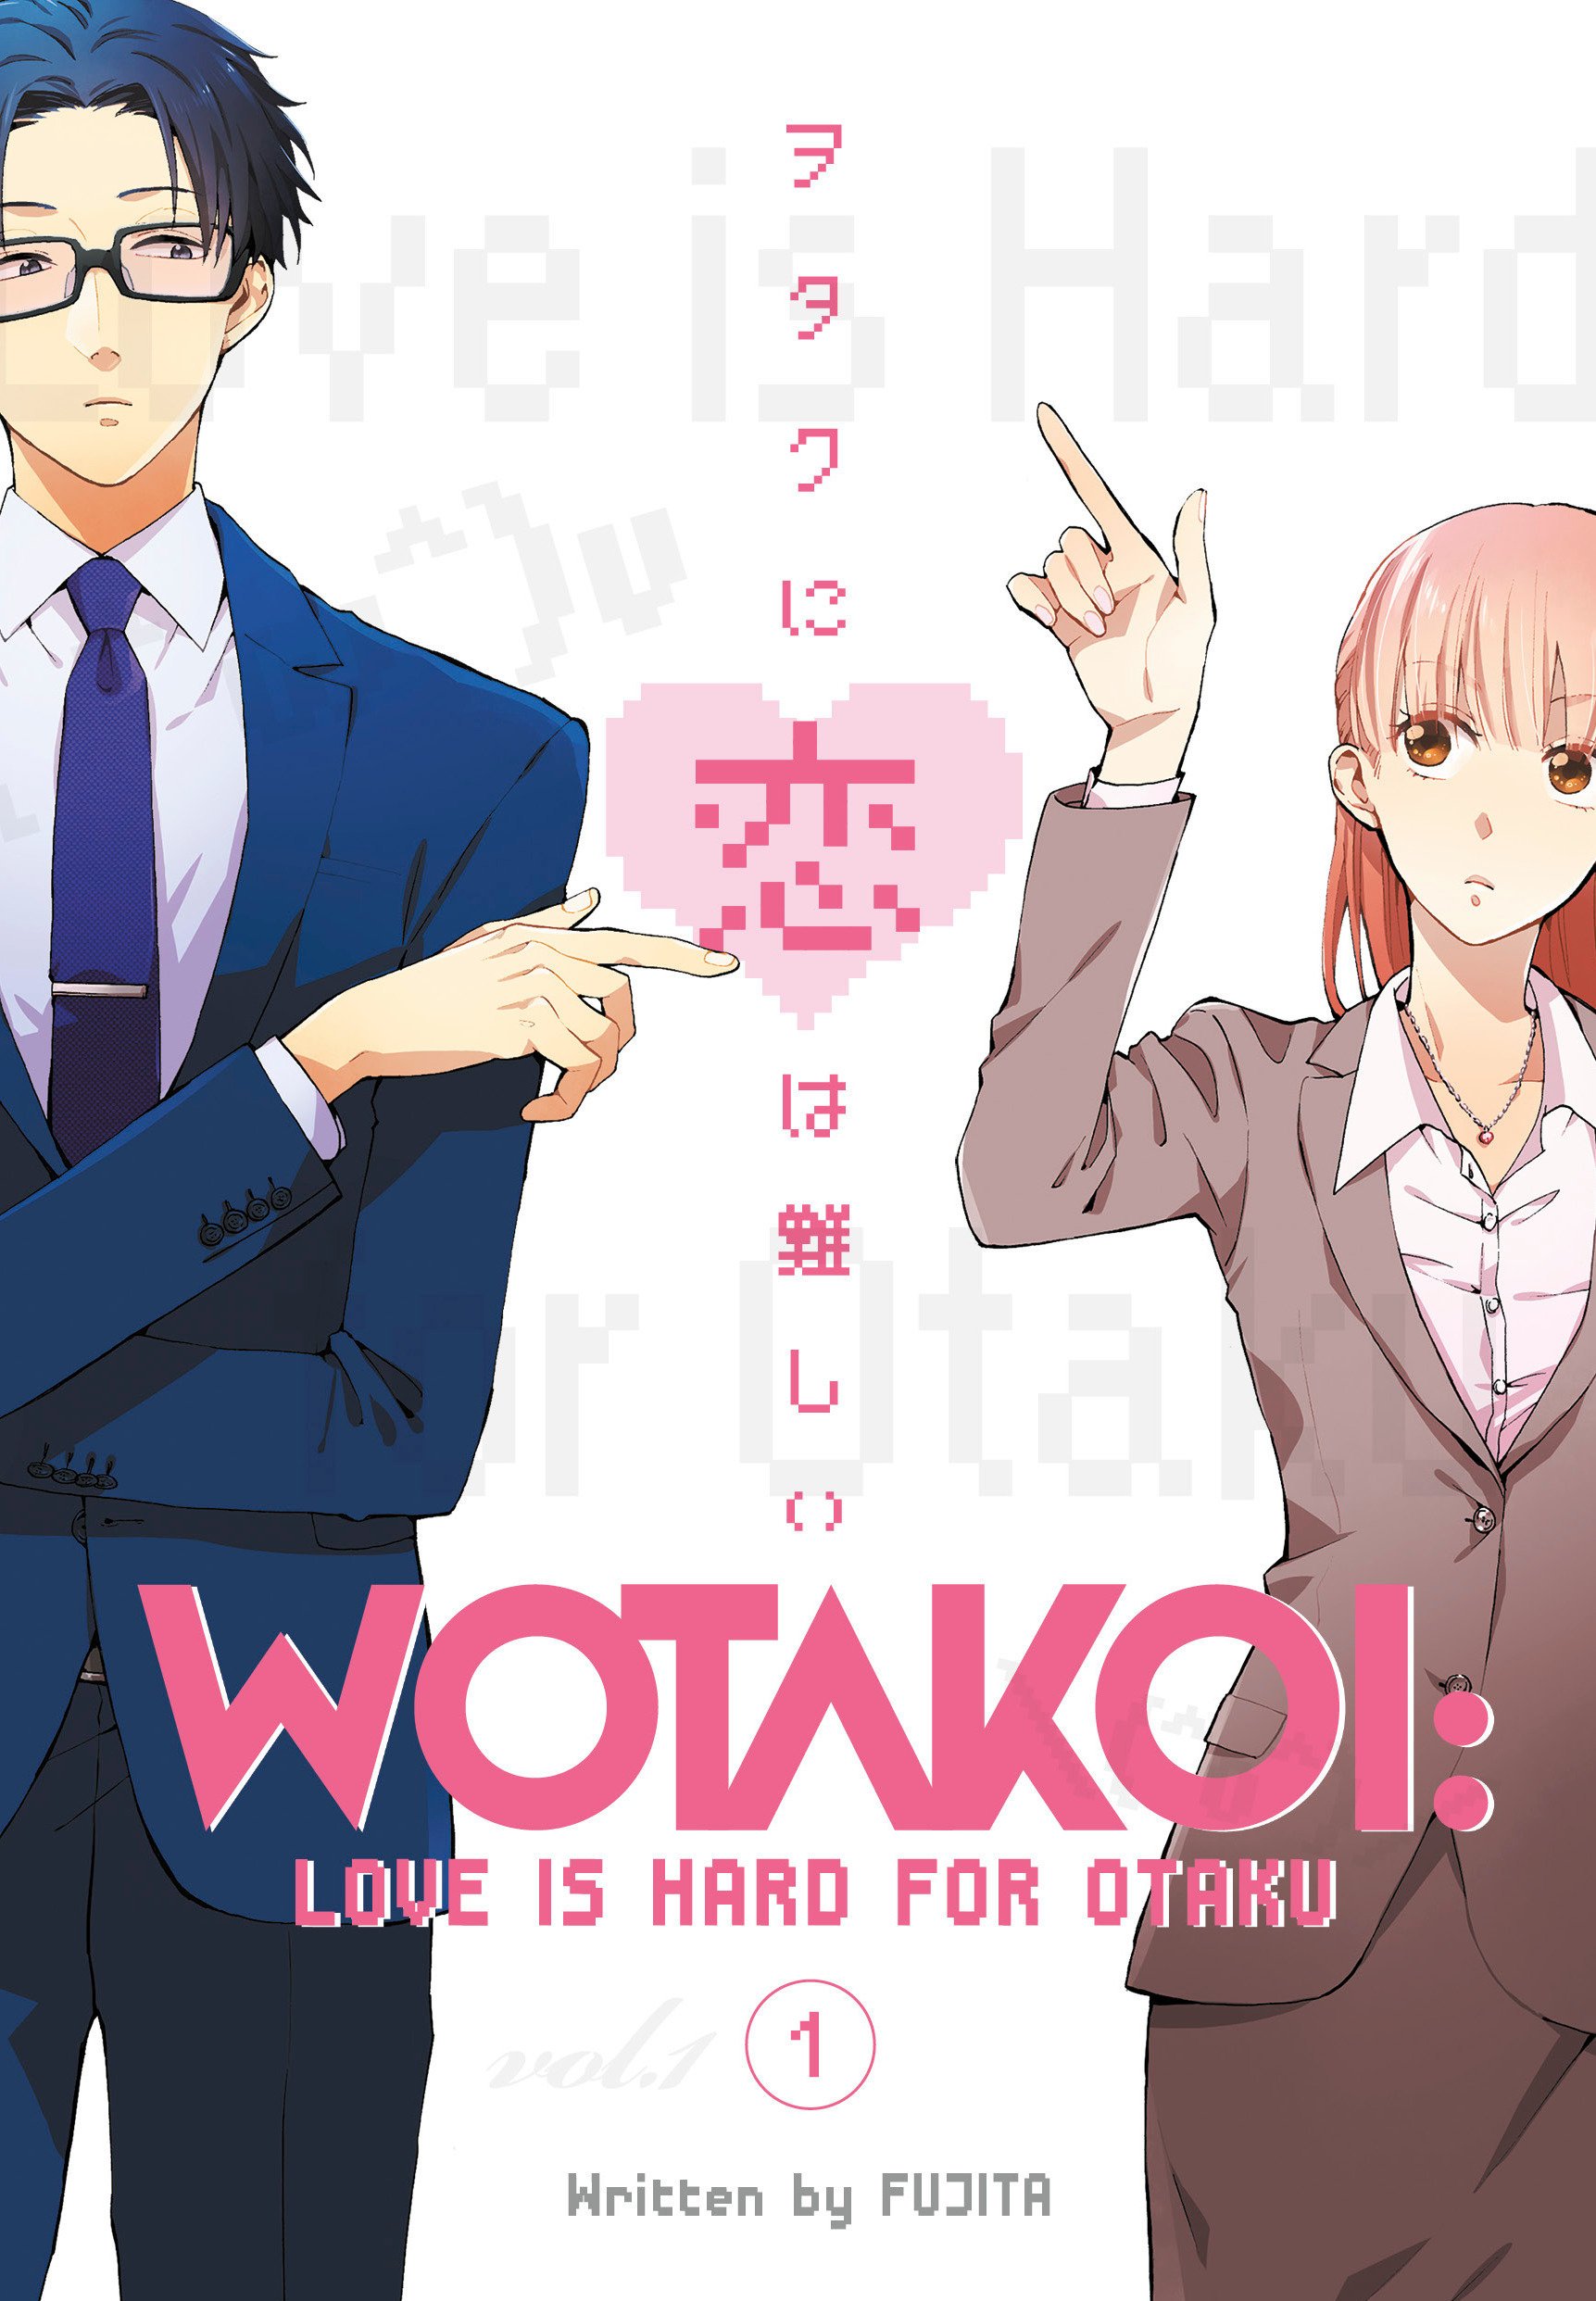 The cover of the Kodansha Comics release of Volume 01 of the Wotakoi: Love is Hard for Otaku manga by Fujita, featuring artwork of the main characters Narumi Momose and Hirotaka Nifuji in their office clothes.